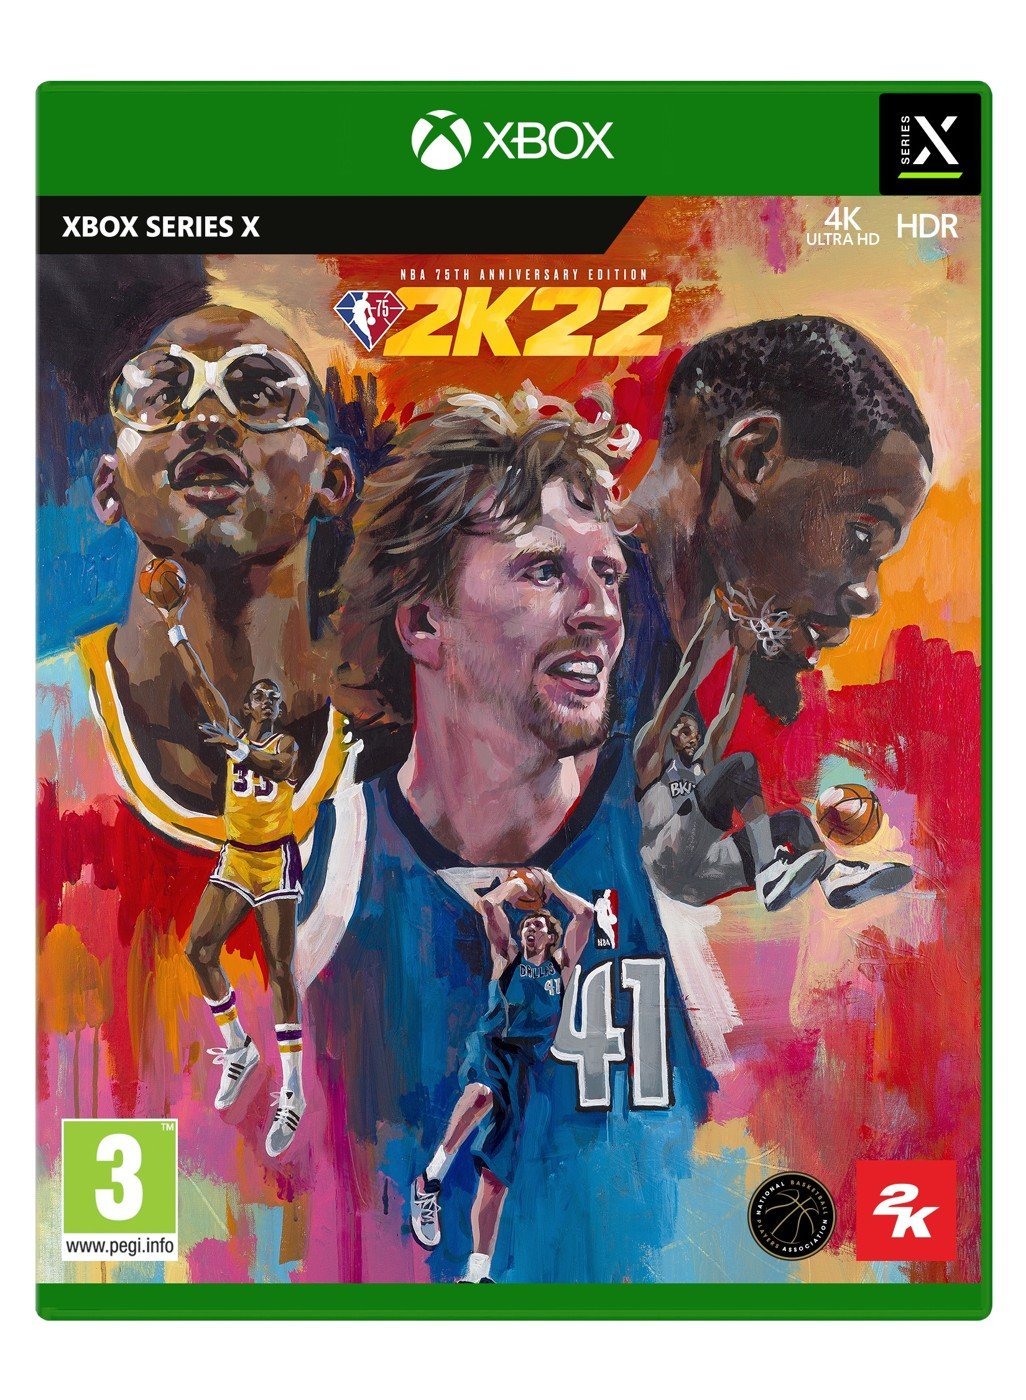 NBA 2K22 – Xbox Series X